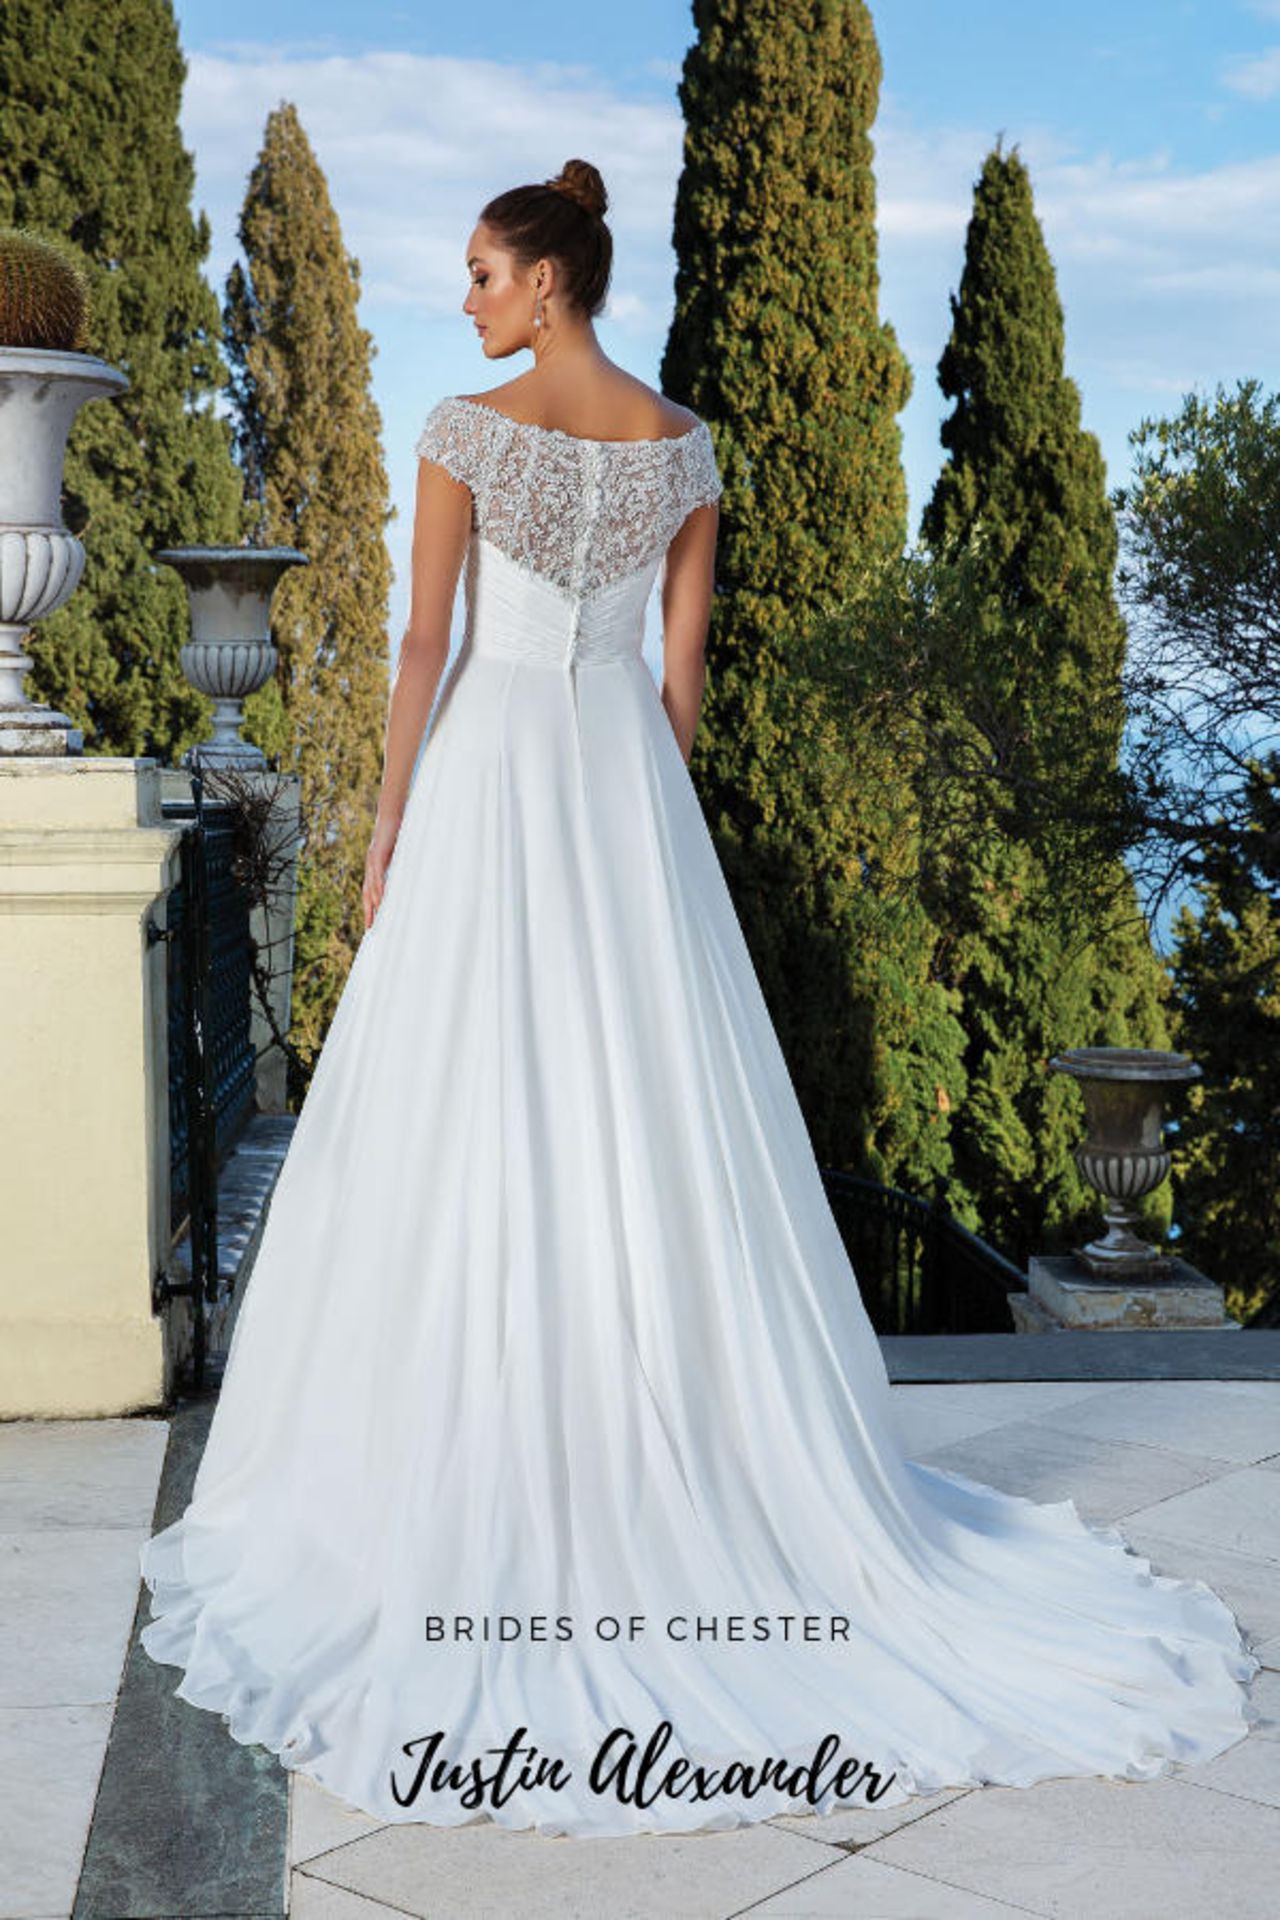 1 x Justin Alexander 'Aphrodite' Chiffon Bridal Gown - UK Size 16 - RRP £1,415 - Image 21 of 23